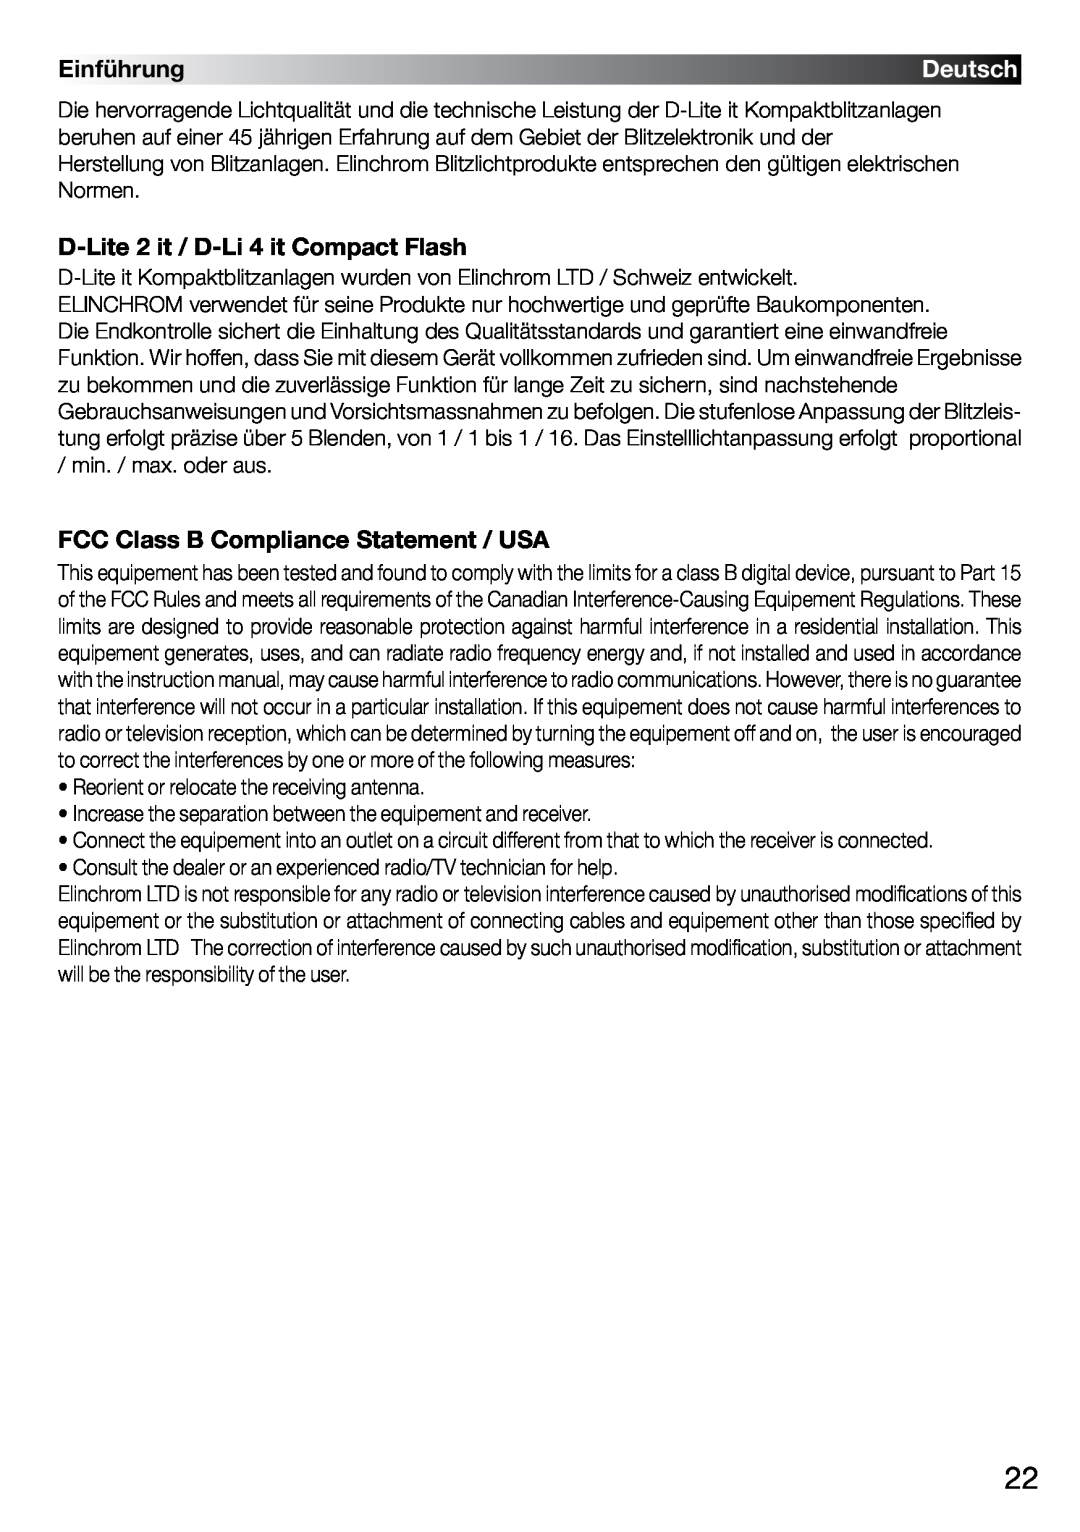 Elinchrom 4 IT, 2 IT Einführung, D-Lite2 it / D-Li4 it Compact Flash, FCC Class B Compliance Statement / USA, Deutsch 